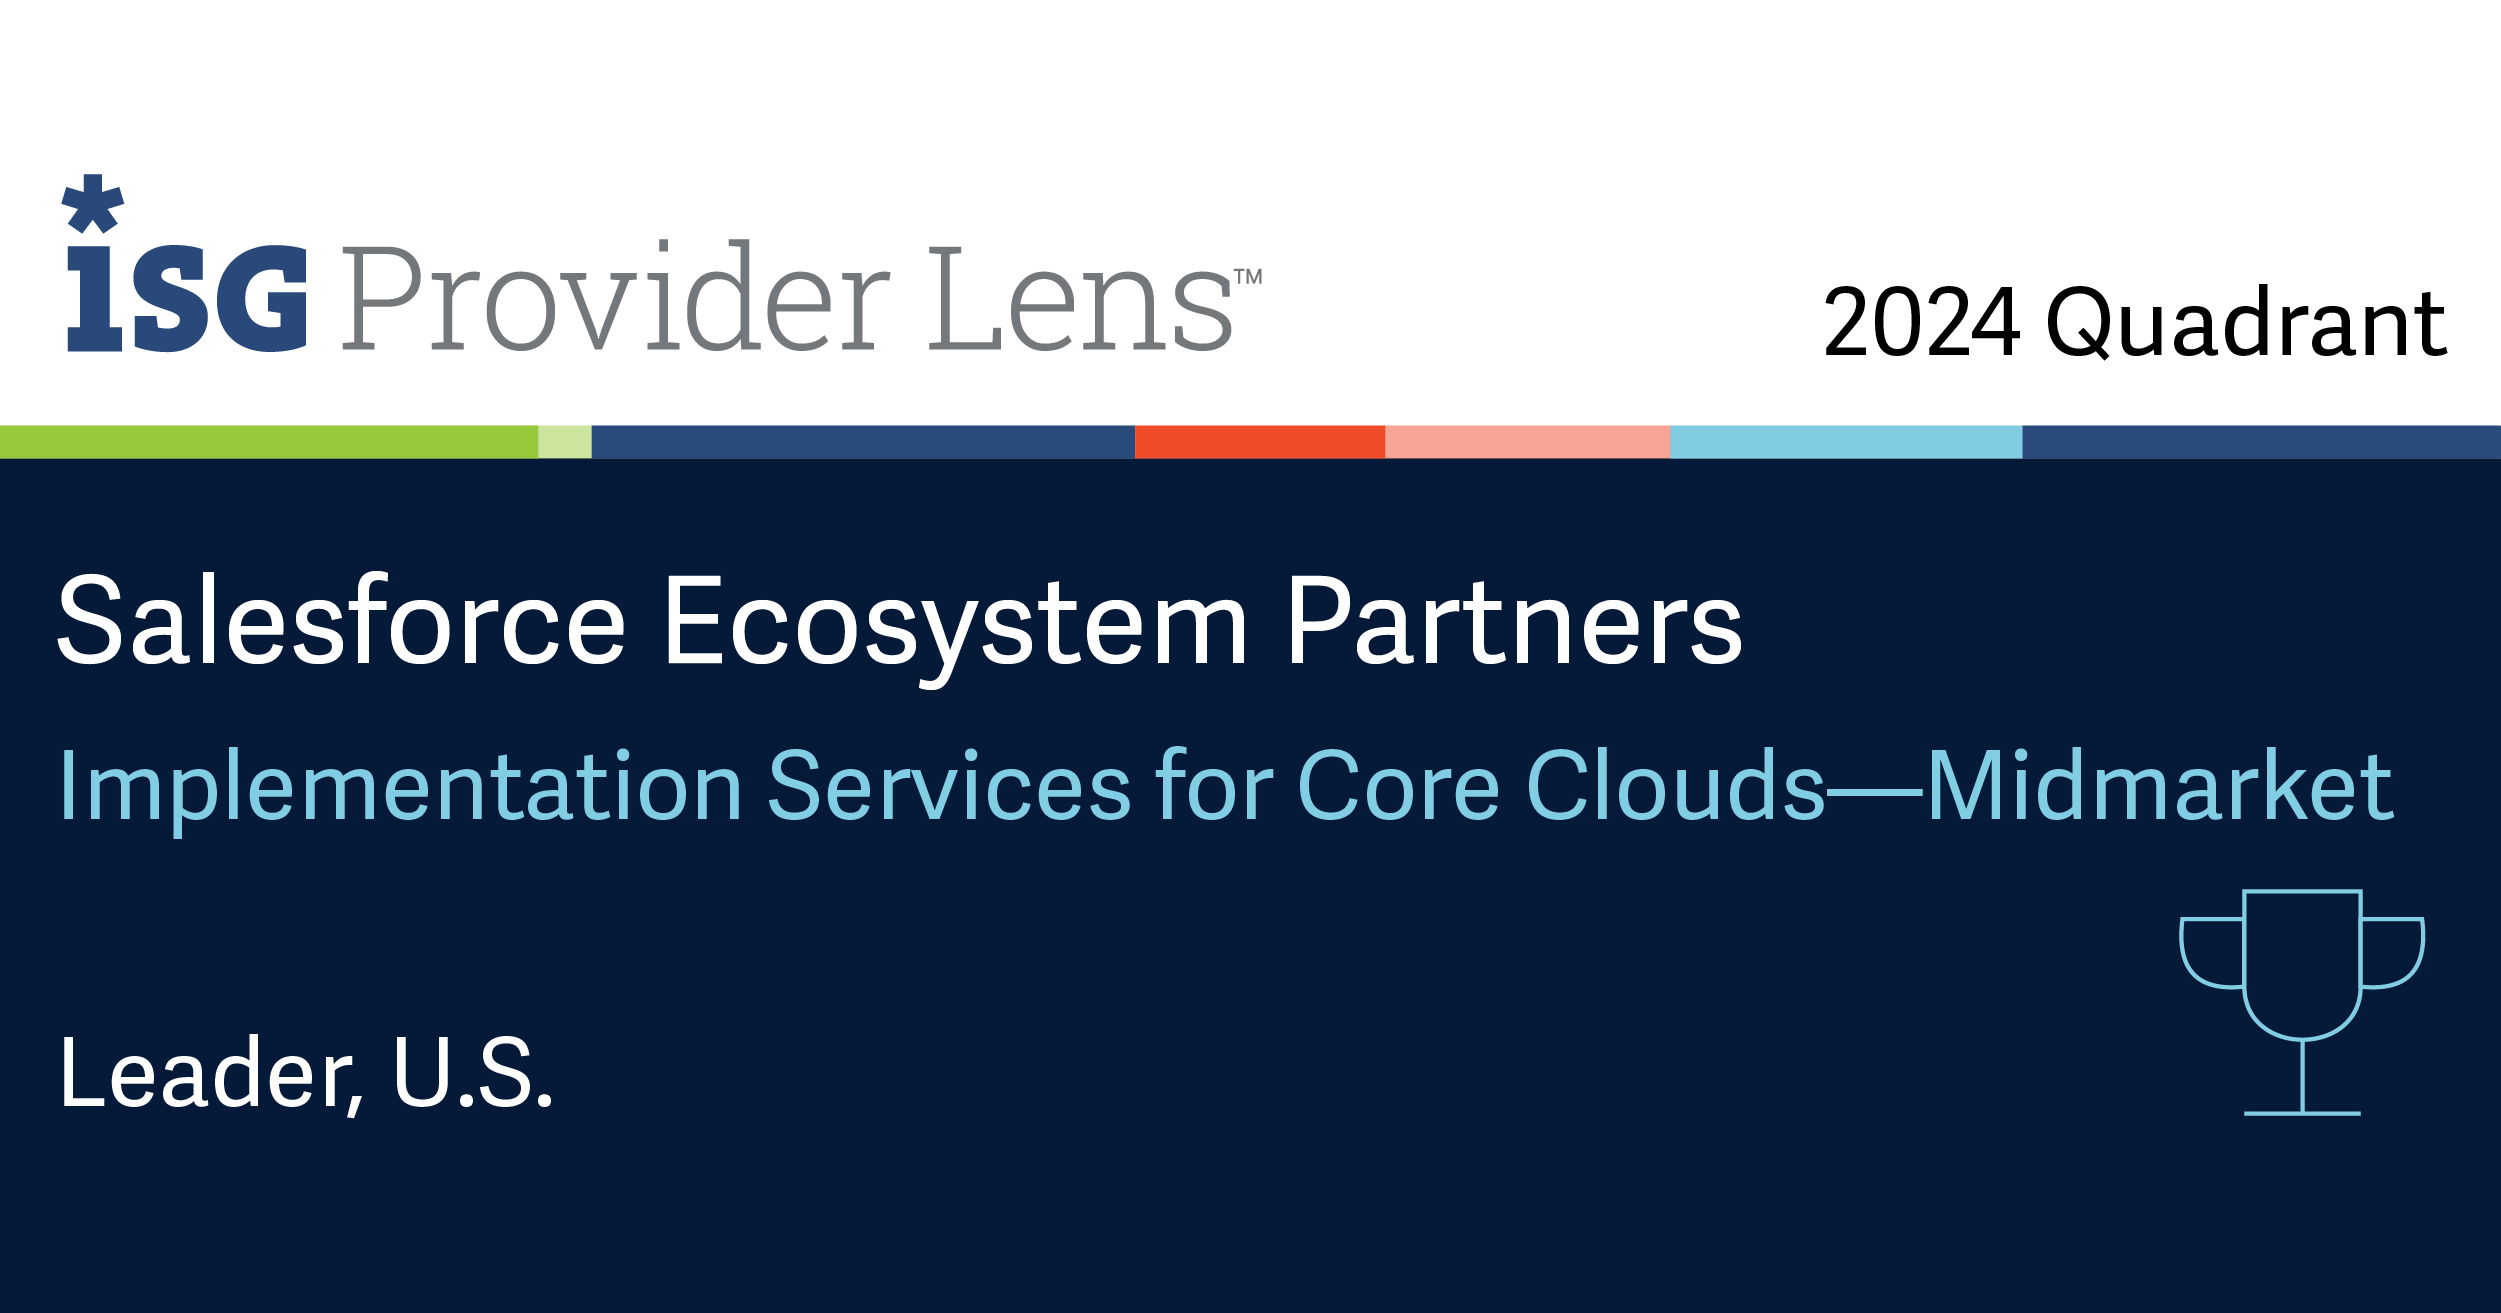 Implementation Services for Core Clouds Midmarket_Leader_2024